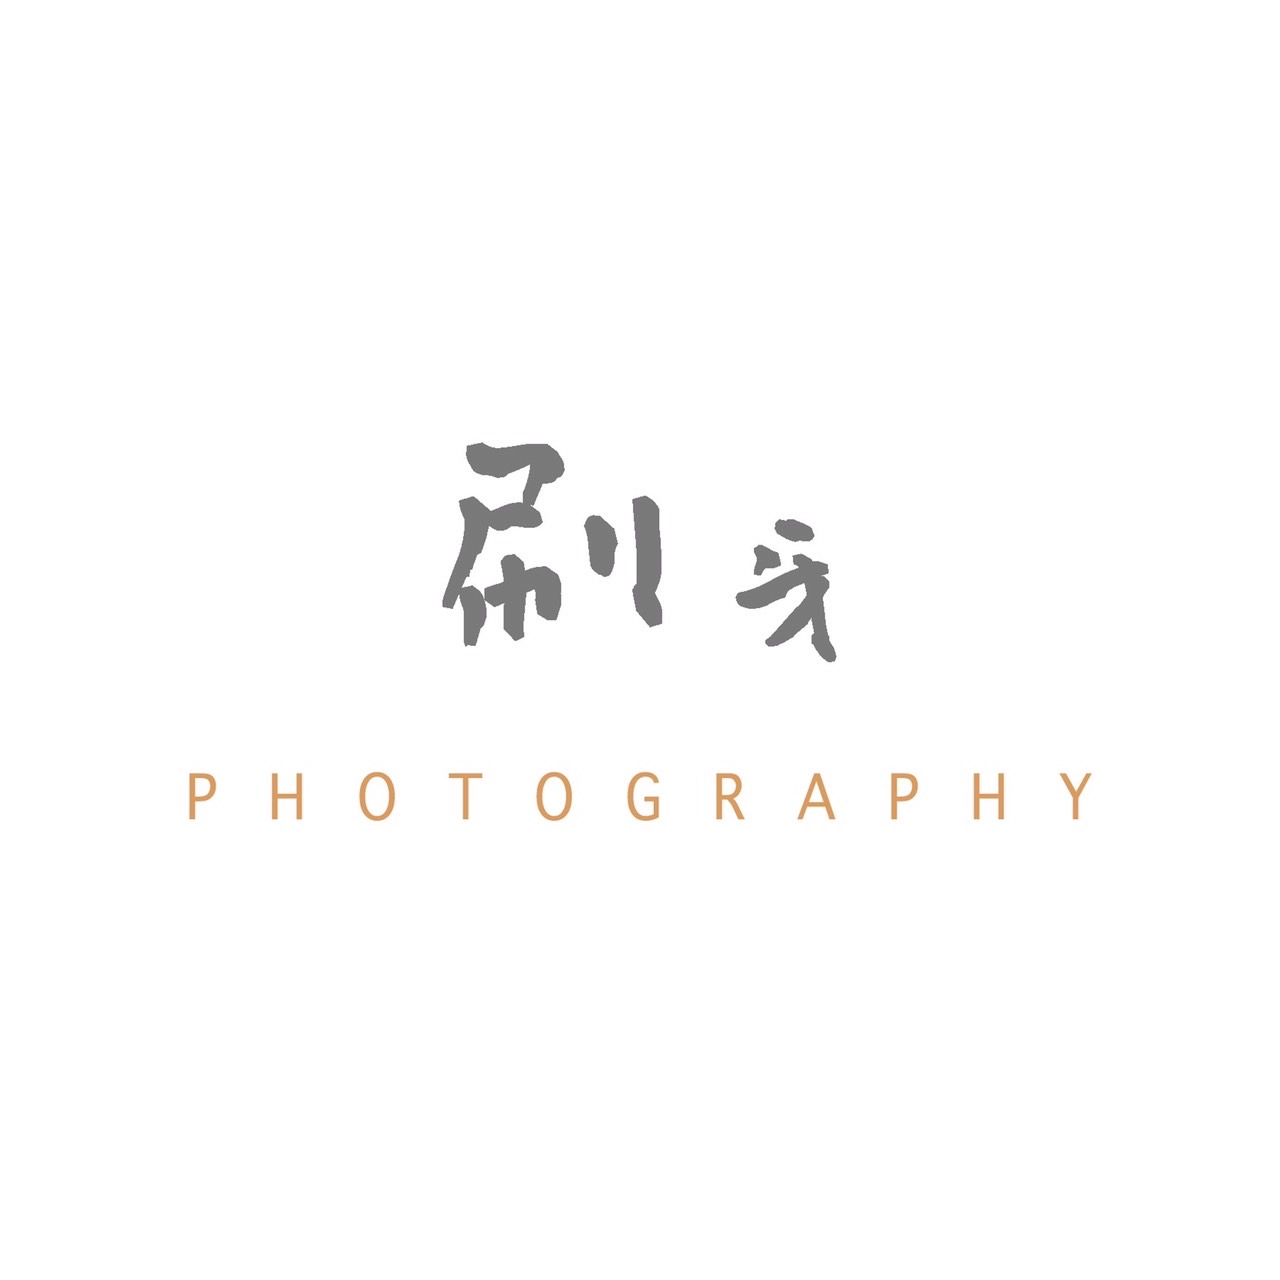 刷牙 Photography | 自助婚紗攝影師 - 台南攝影工作室